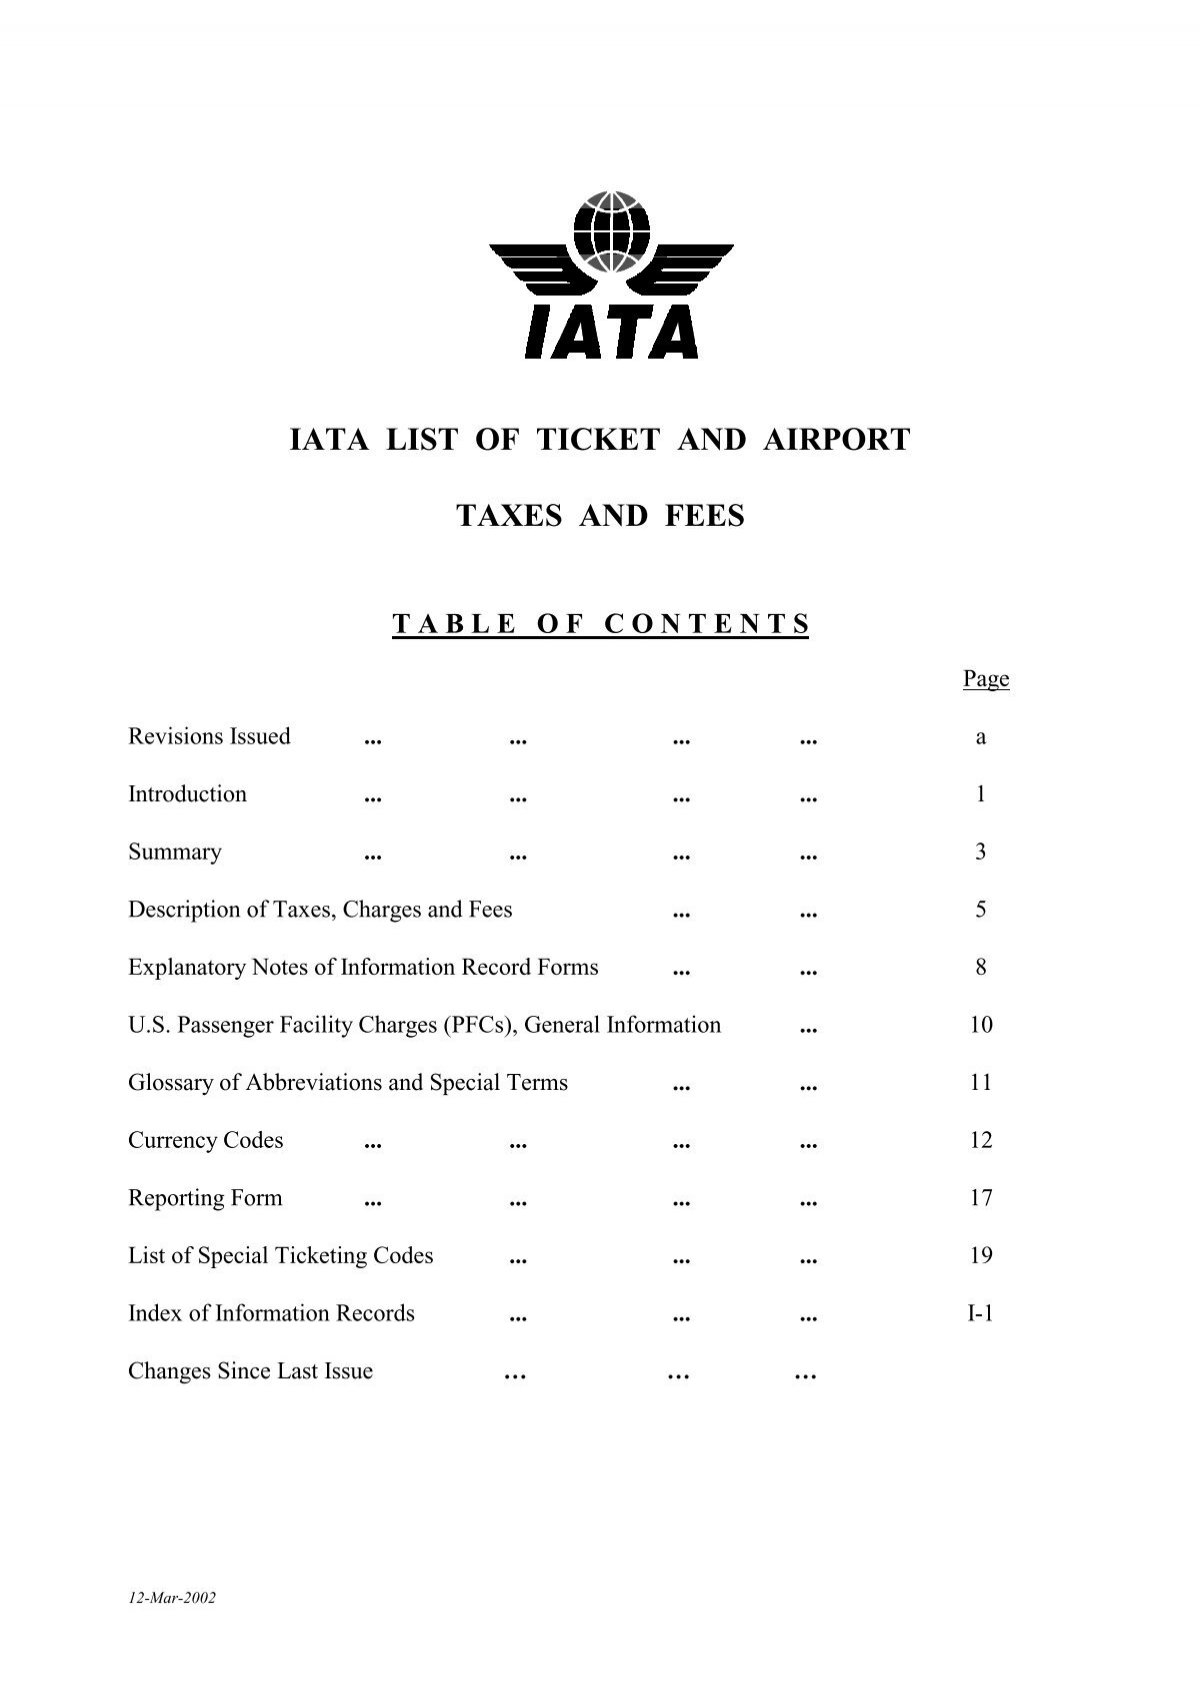 Airport Code Phone Case - IATA code SDF Mobile Cover